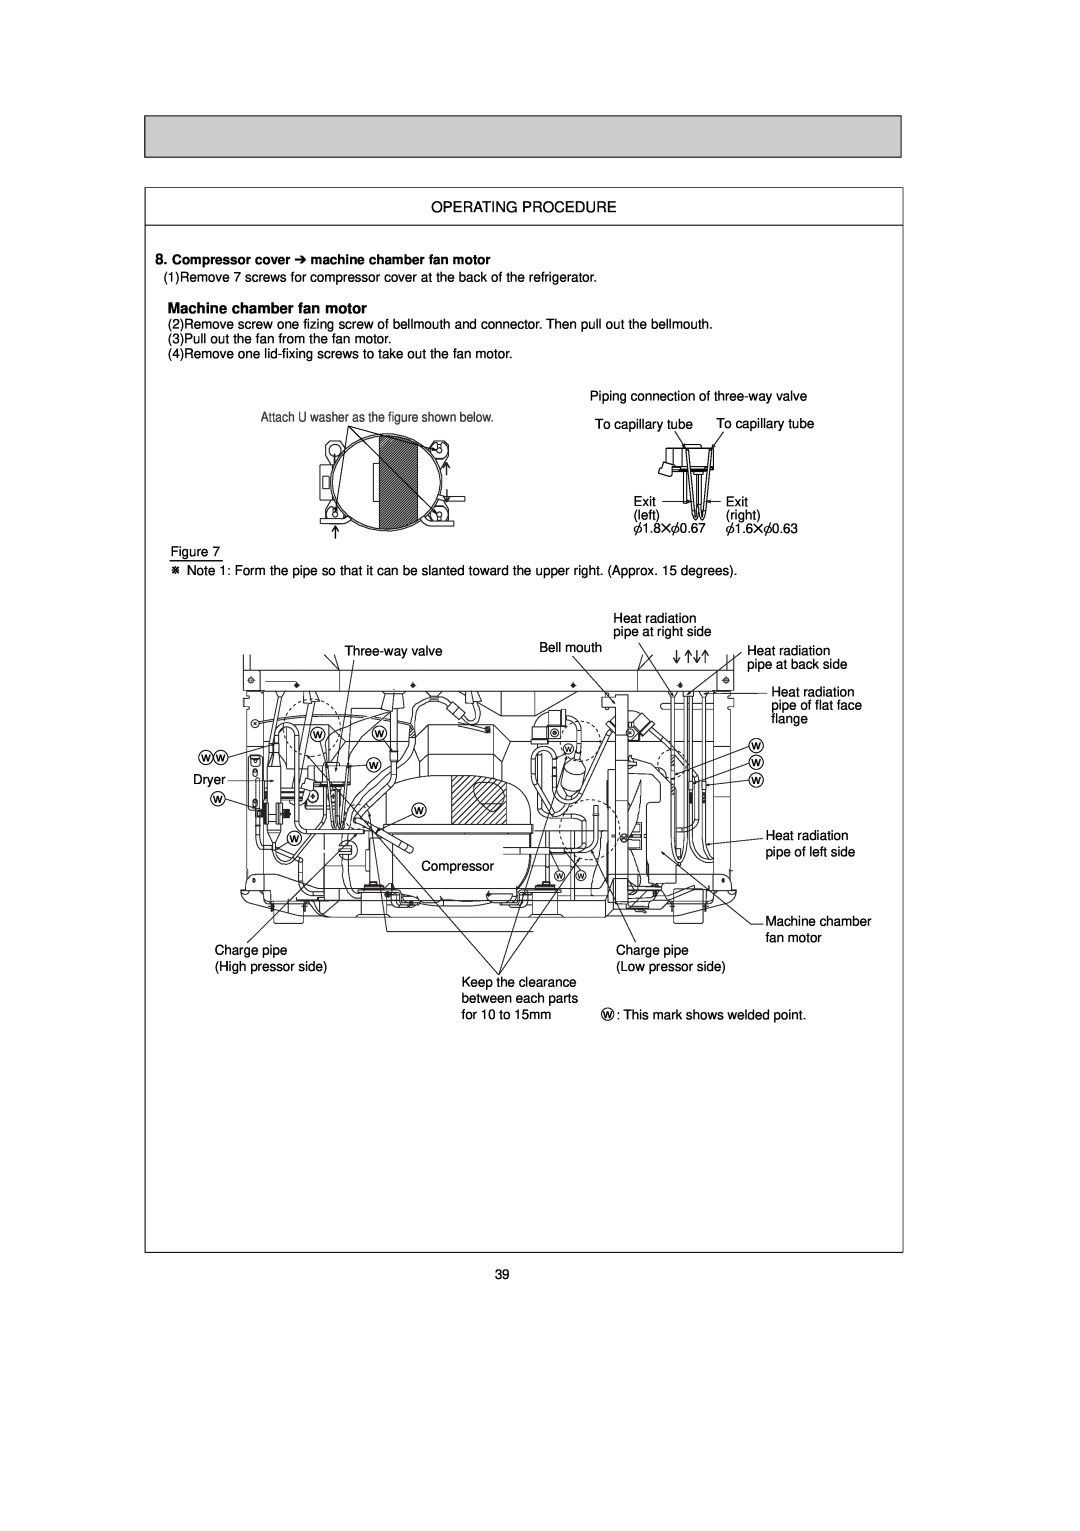 Mitsubishi Electronics MR-G50J-SS-NZ manual Machine chamber fan motor, Operating Procedure 